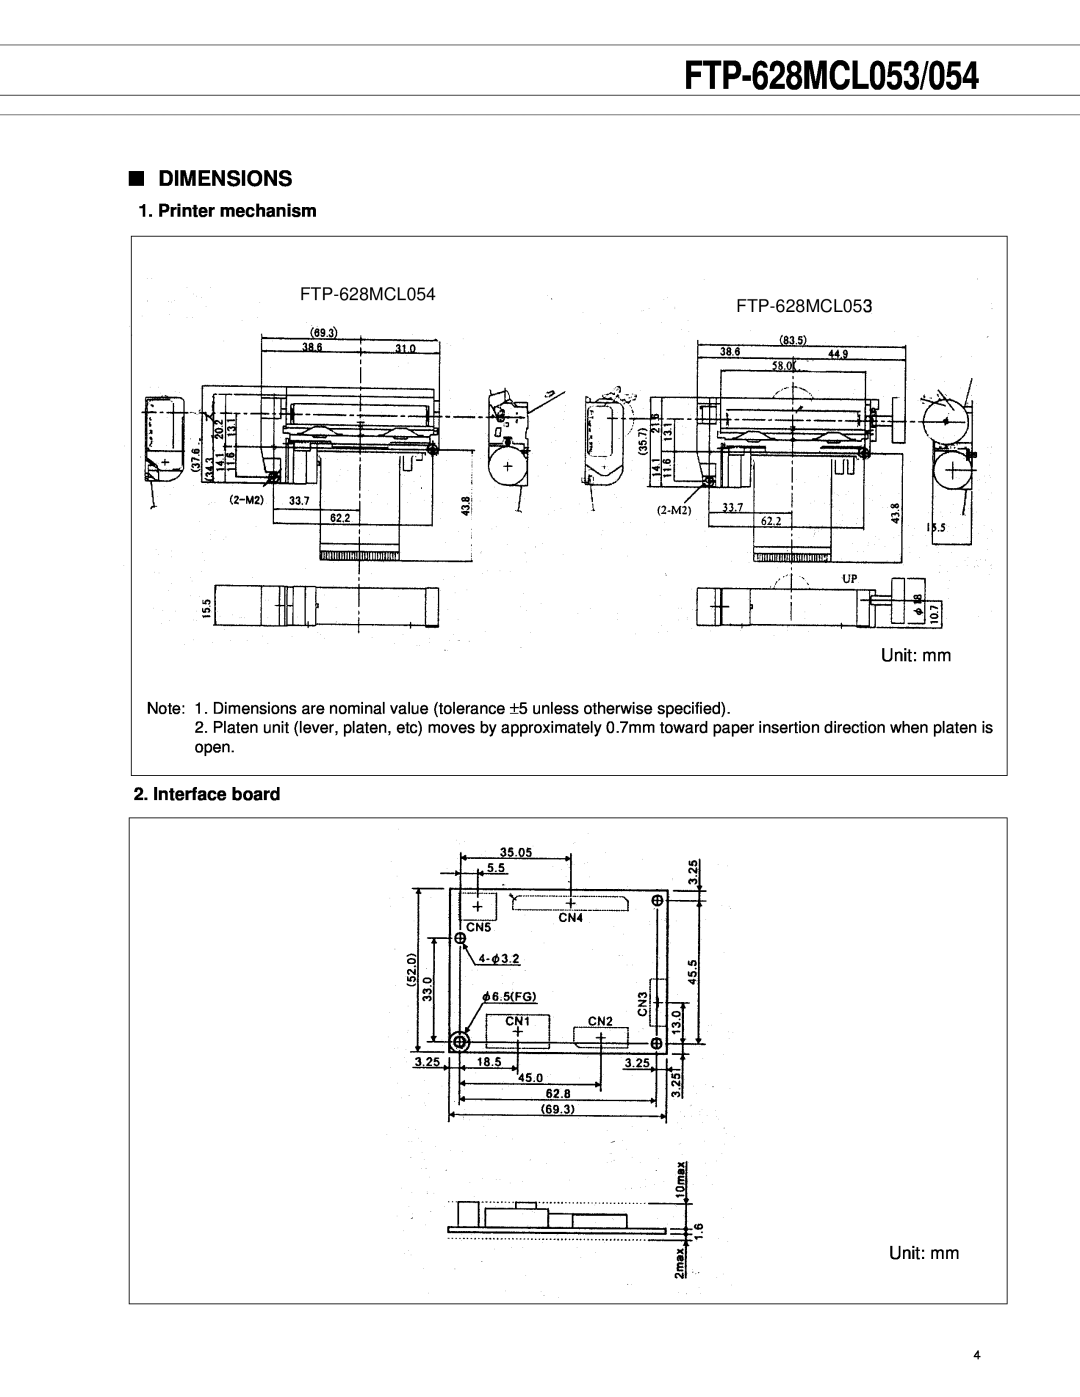 Fujitsu FTP-628MCL054 manual Dimensions, FTP-628MCL053/054, Printer mechanism, Interface board 